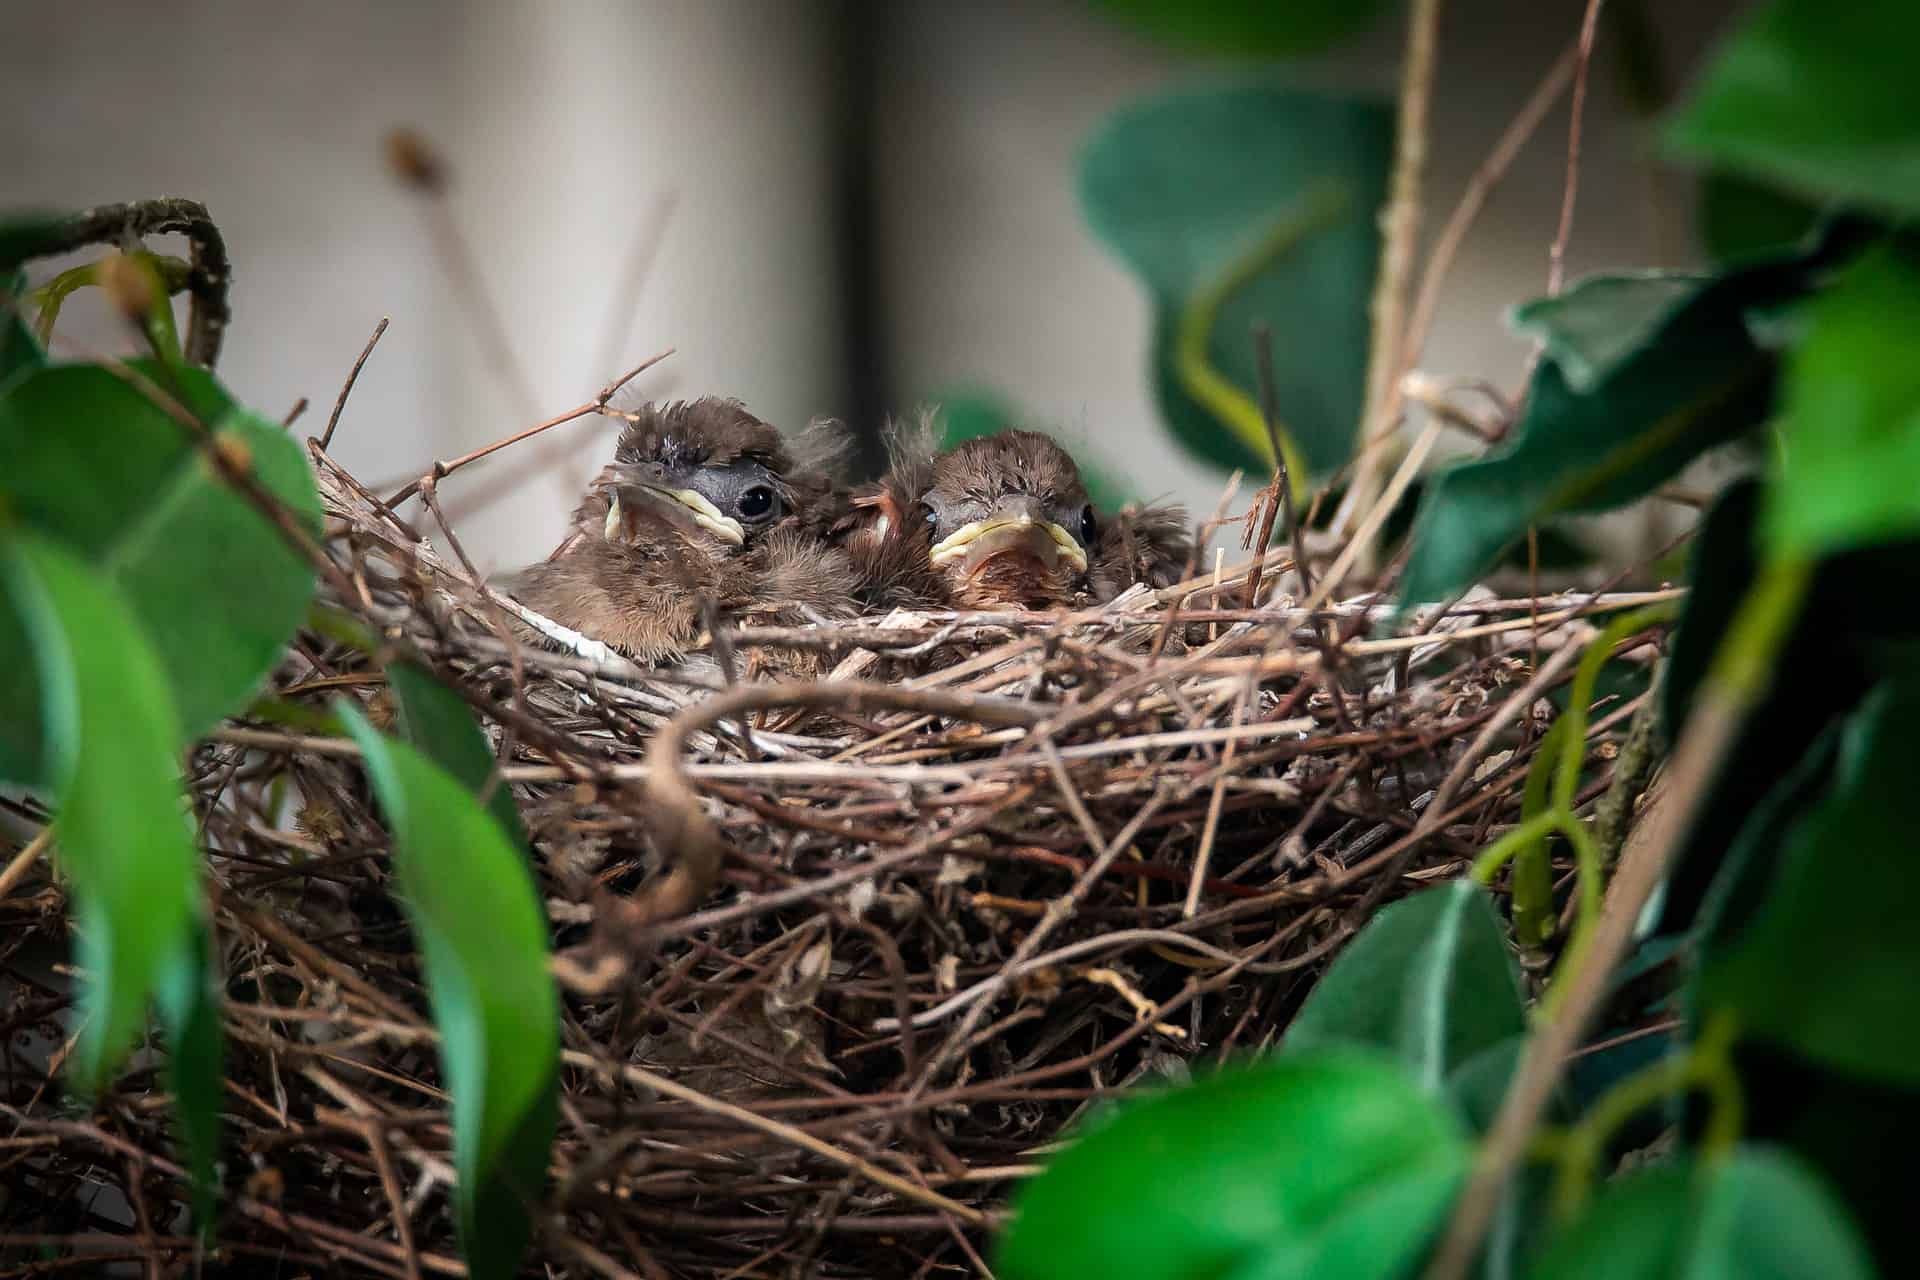 Cardinal nestlings in a nest